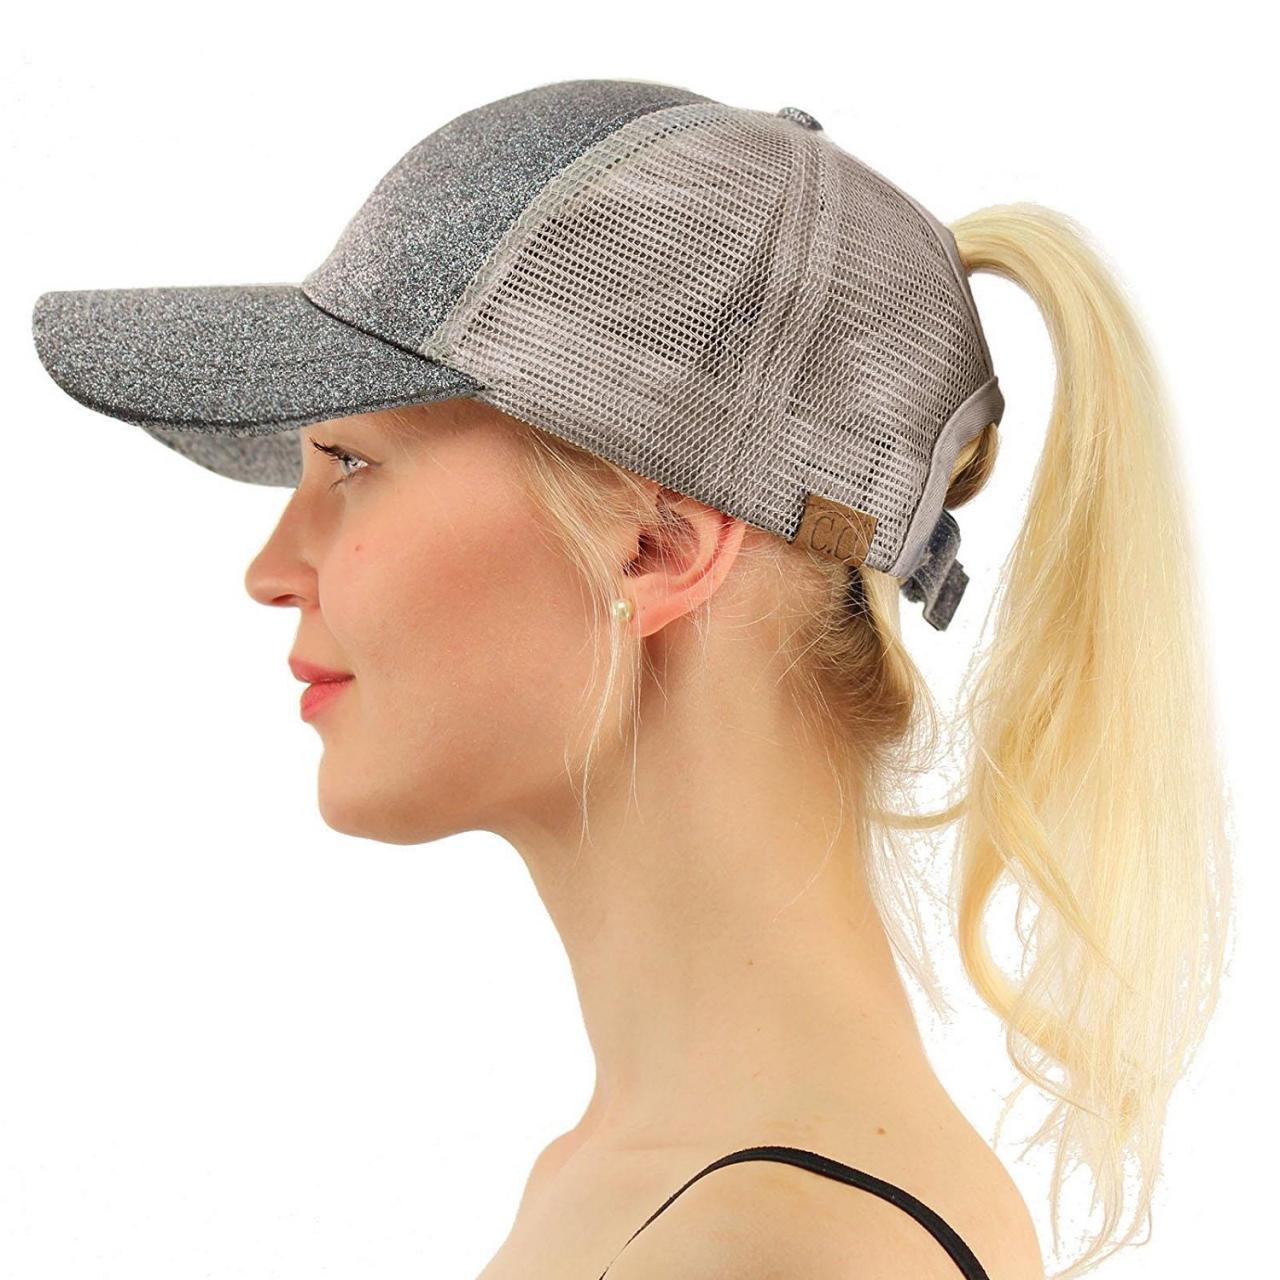  Glitter Ponytail Baseball Cap Women Snapback Hat Summer Messy Bun Mesh Hats Casual Adjustable Sport Caps